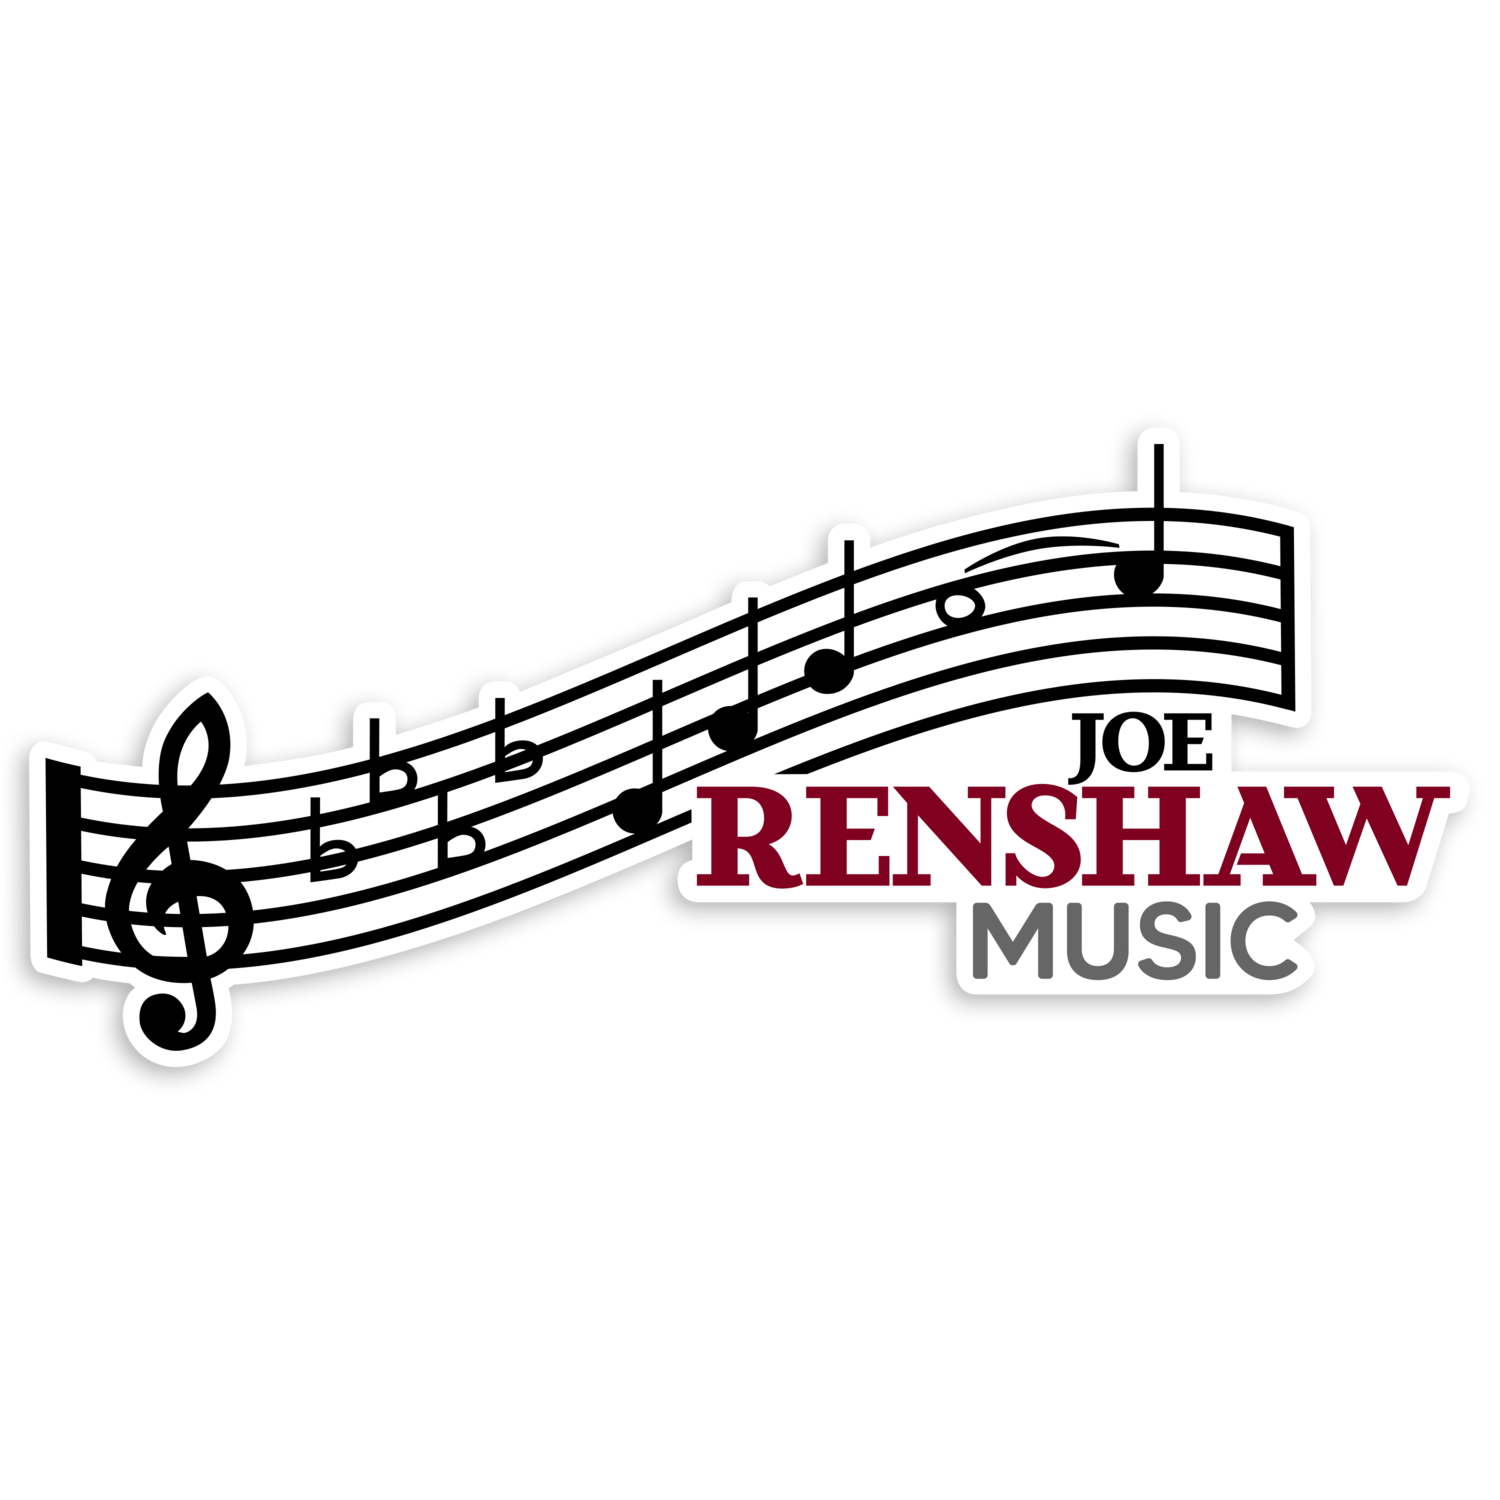 Joe Renshaw Music